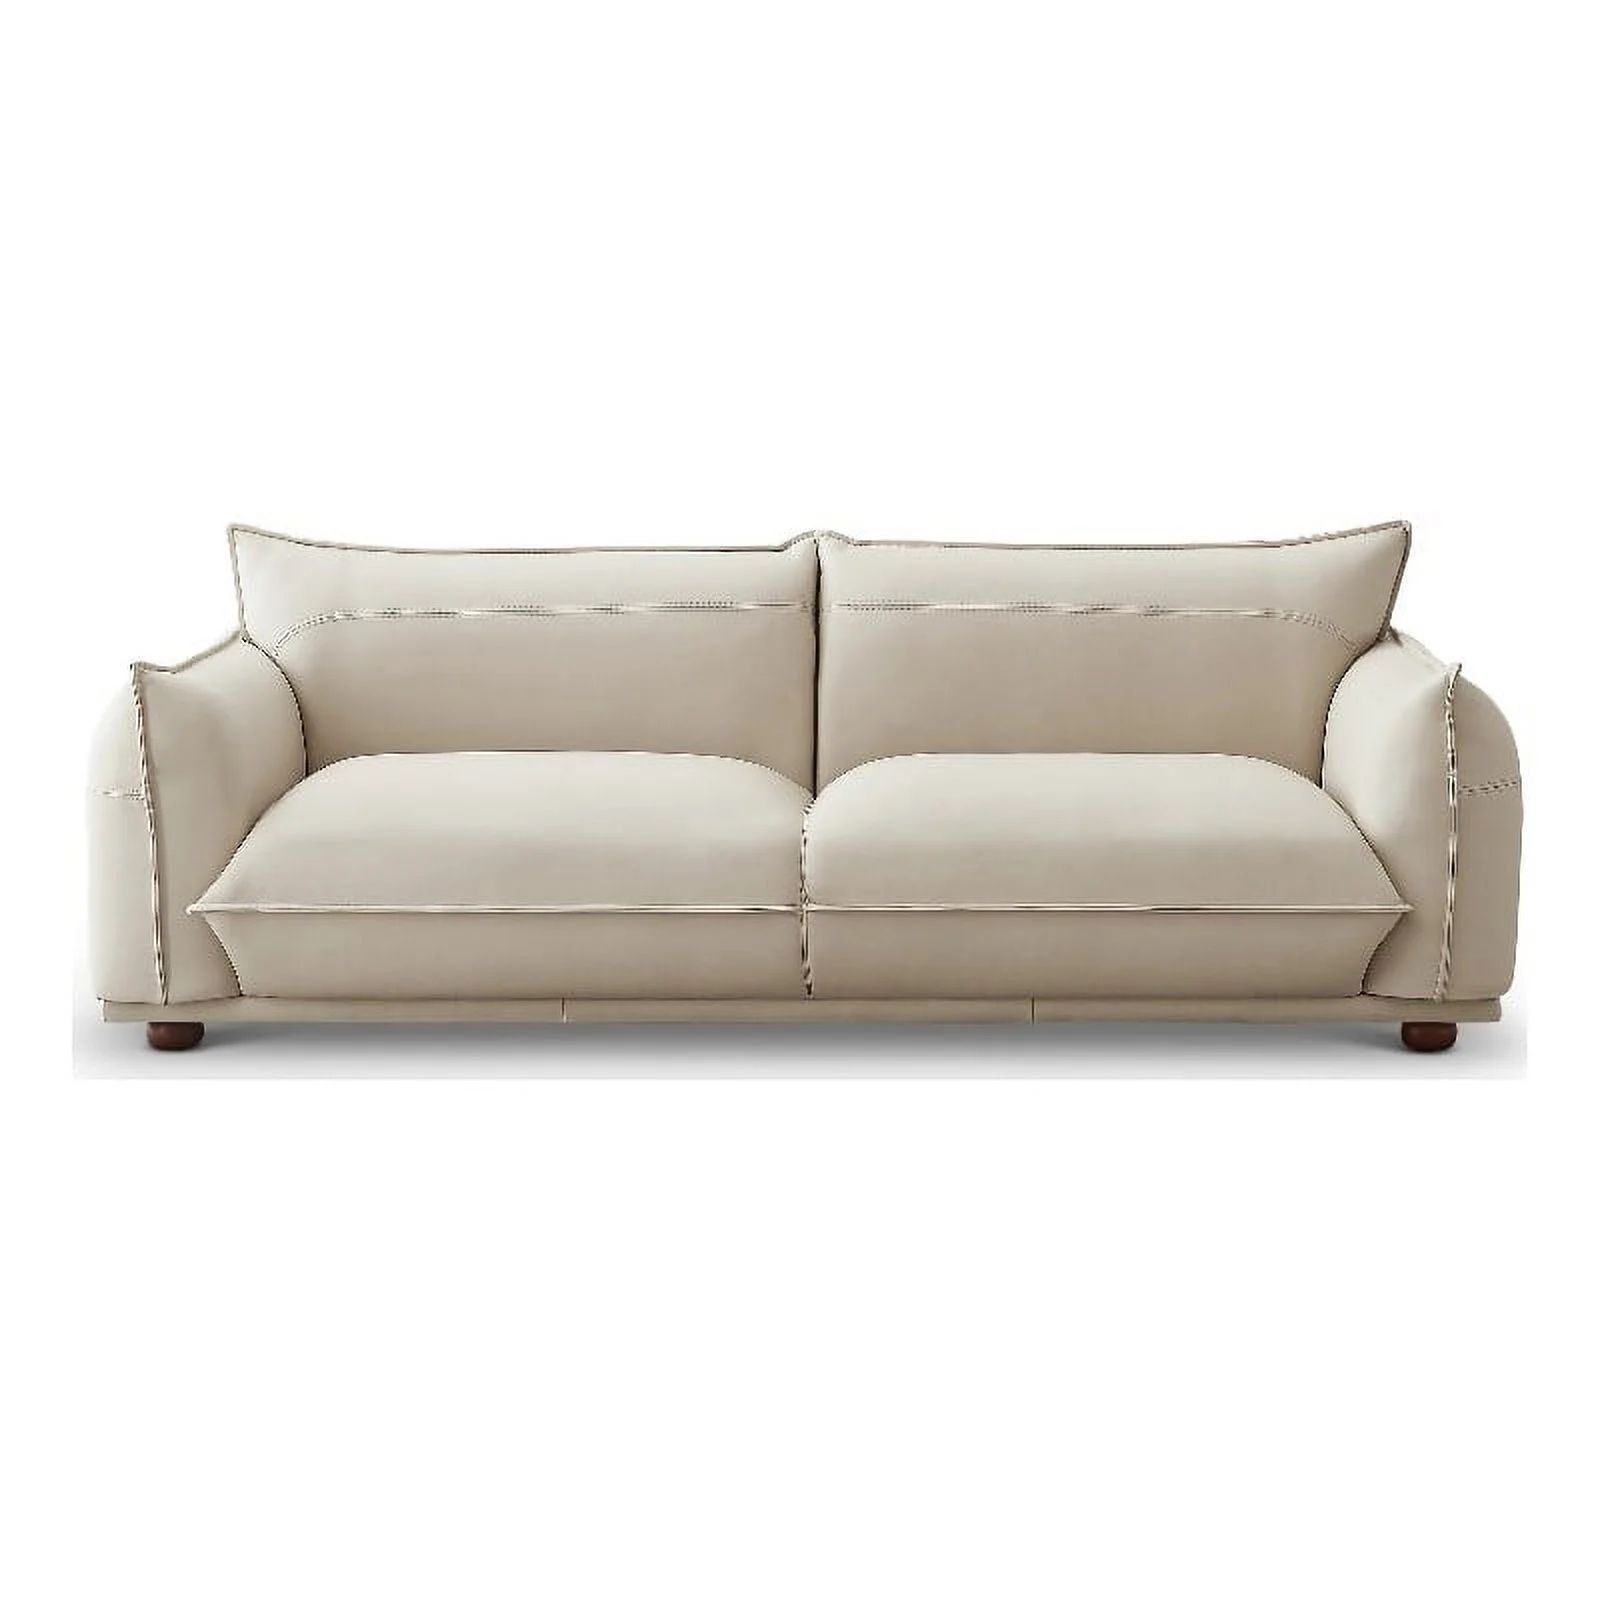 Maner Mid-Century Modern Luxury Living Room Couch in Cream Leather | Walmart (US)